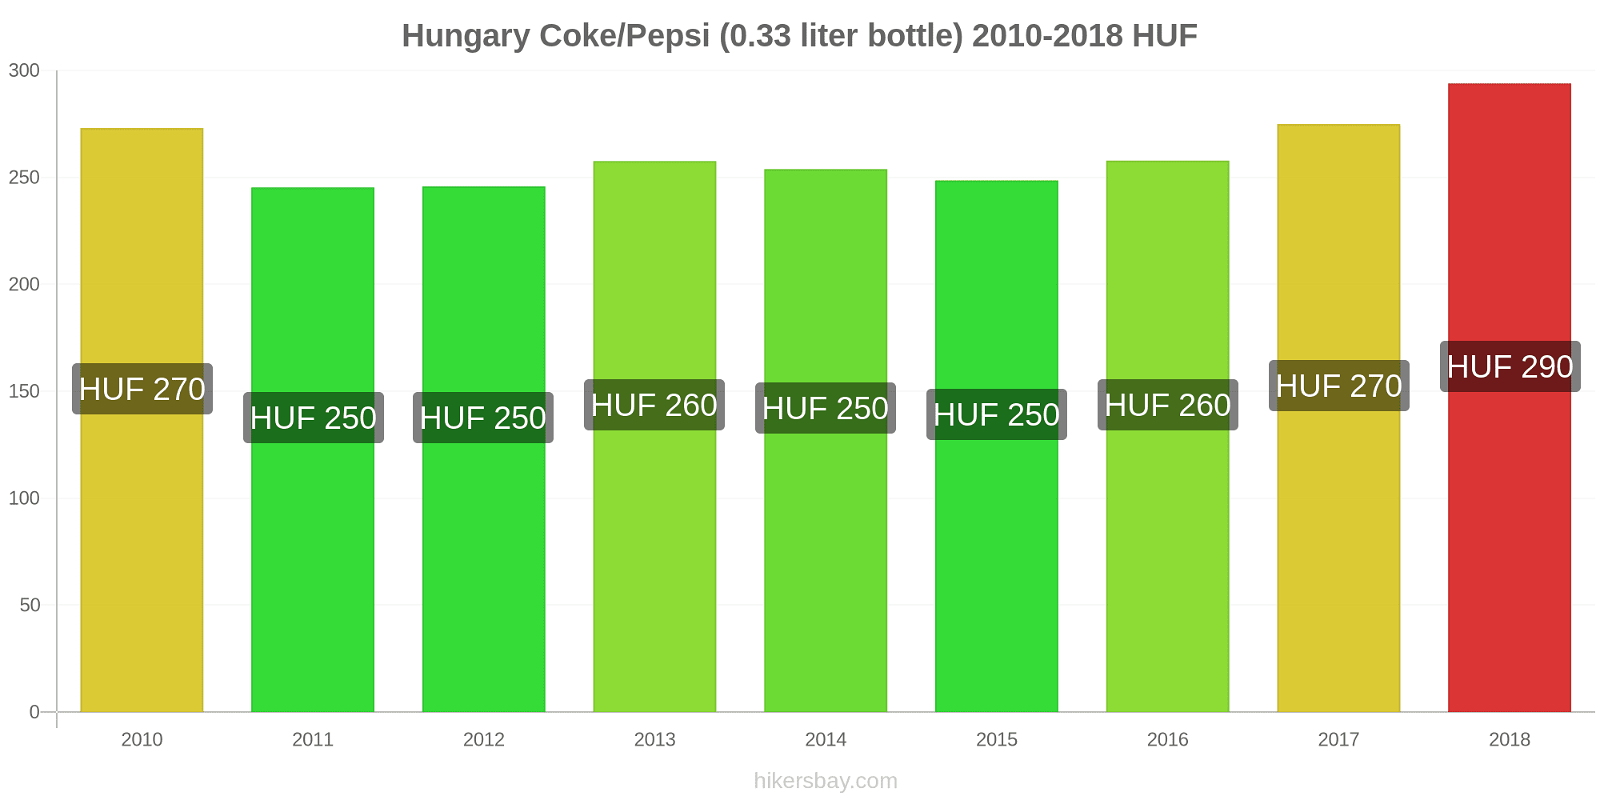 Hungary price changes Coke/Pepsi (0.33 liter bottle) hikersbay.com